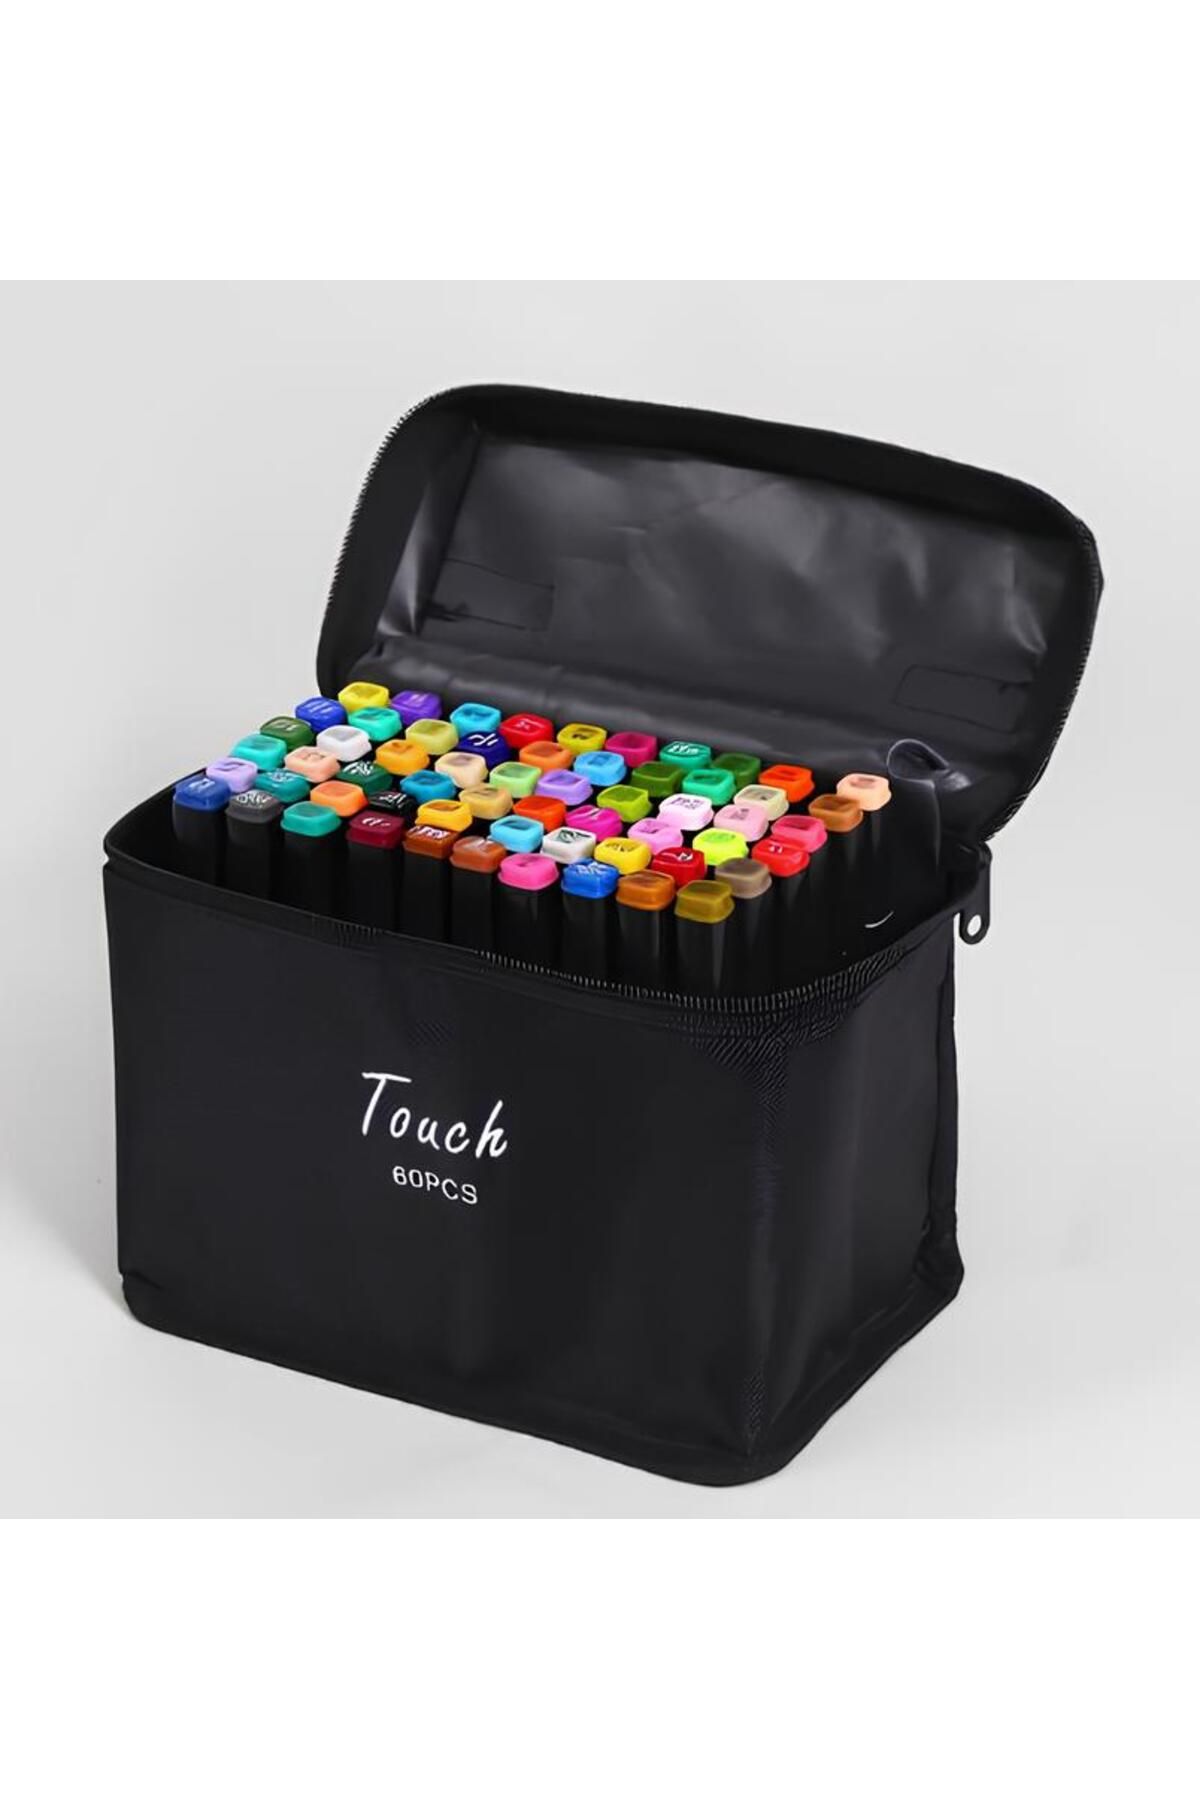 Cıvıltı Touch Marker Art Çift Uçlu 60 Adet Kalem Seti Çantalı Premium Boyama Kalemi